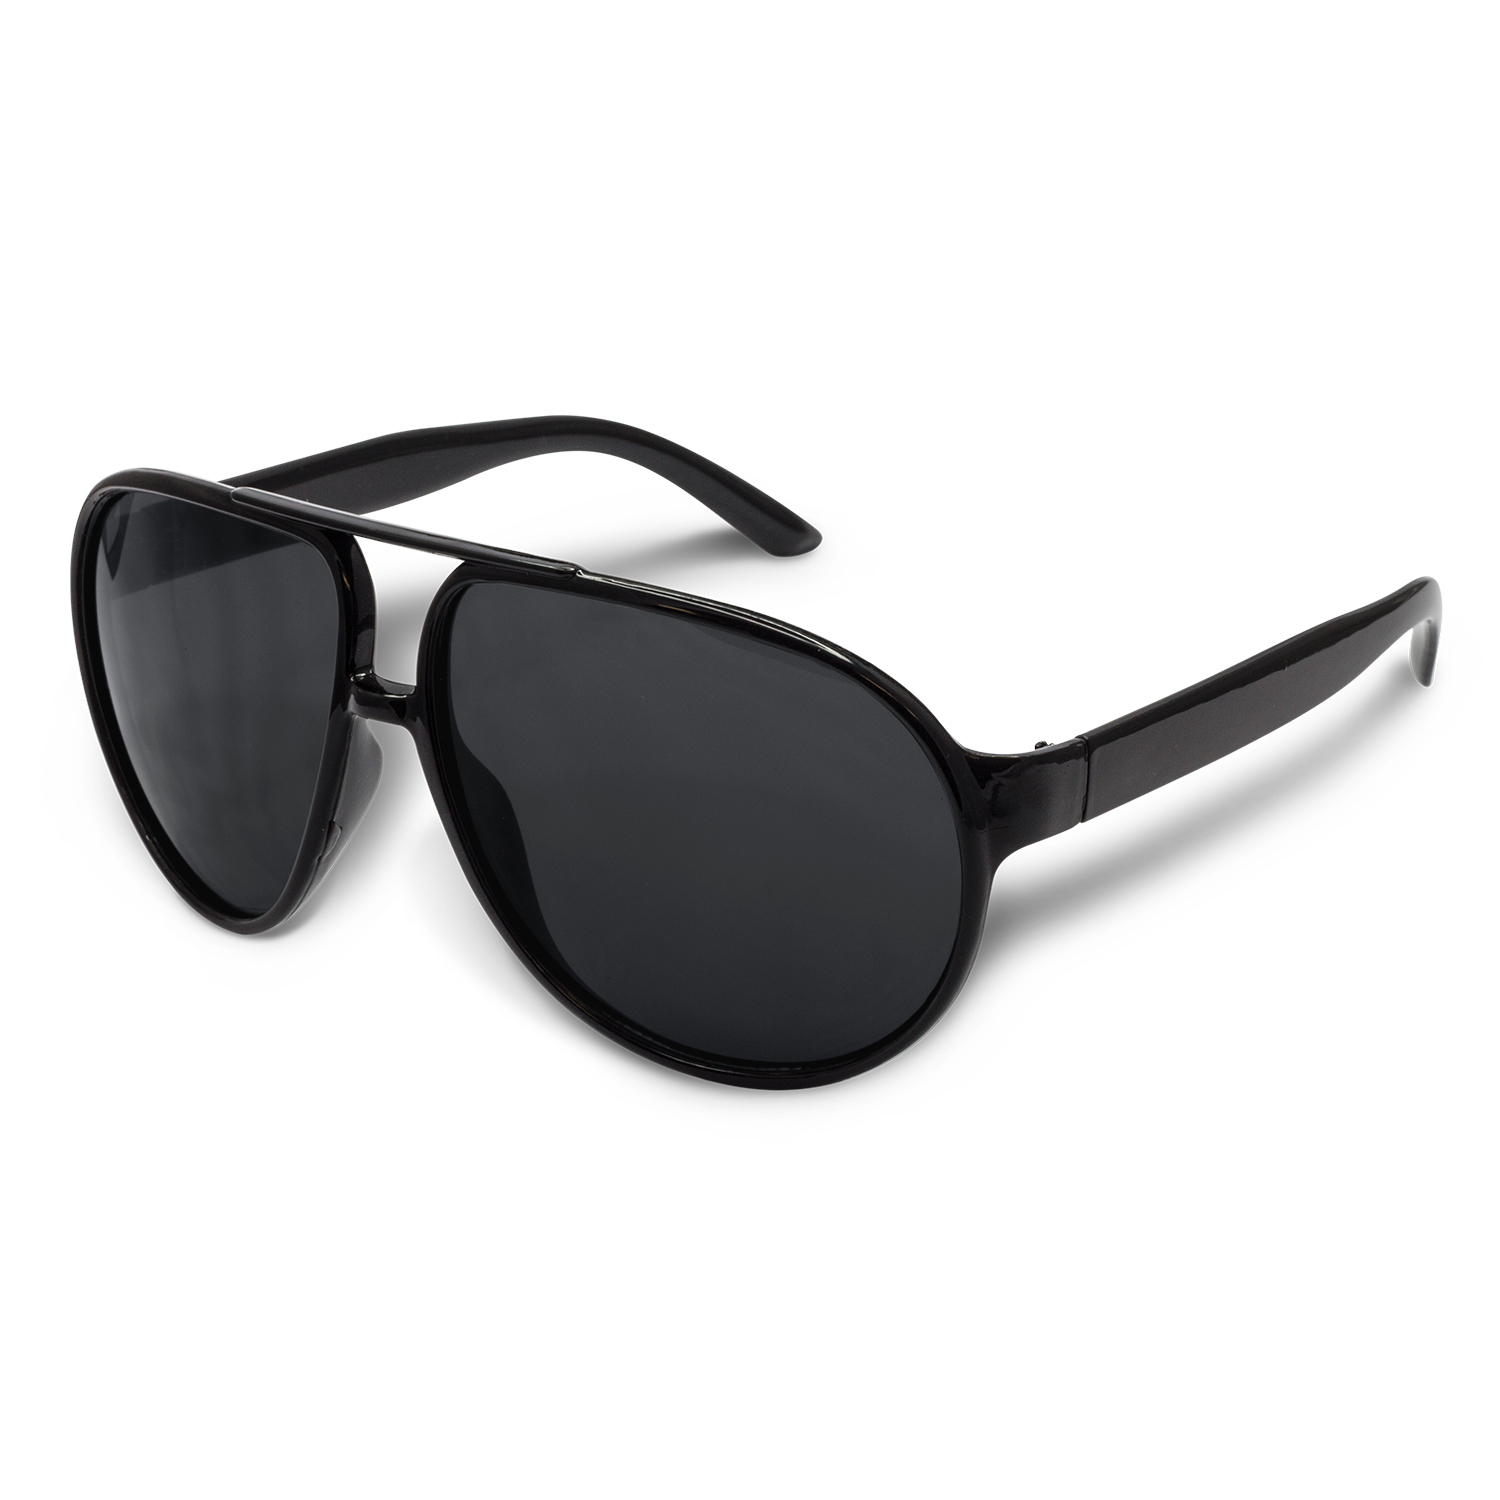 Sunglasses -  Aviators50 Black - one colour/position print